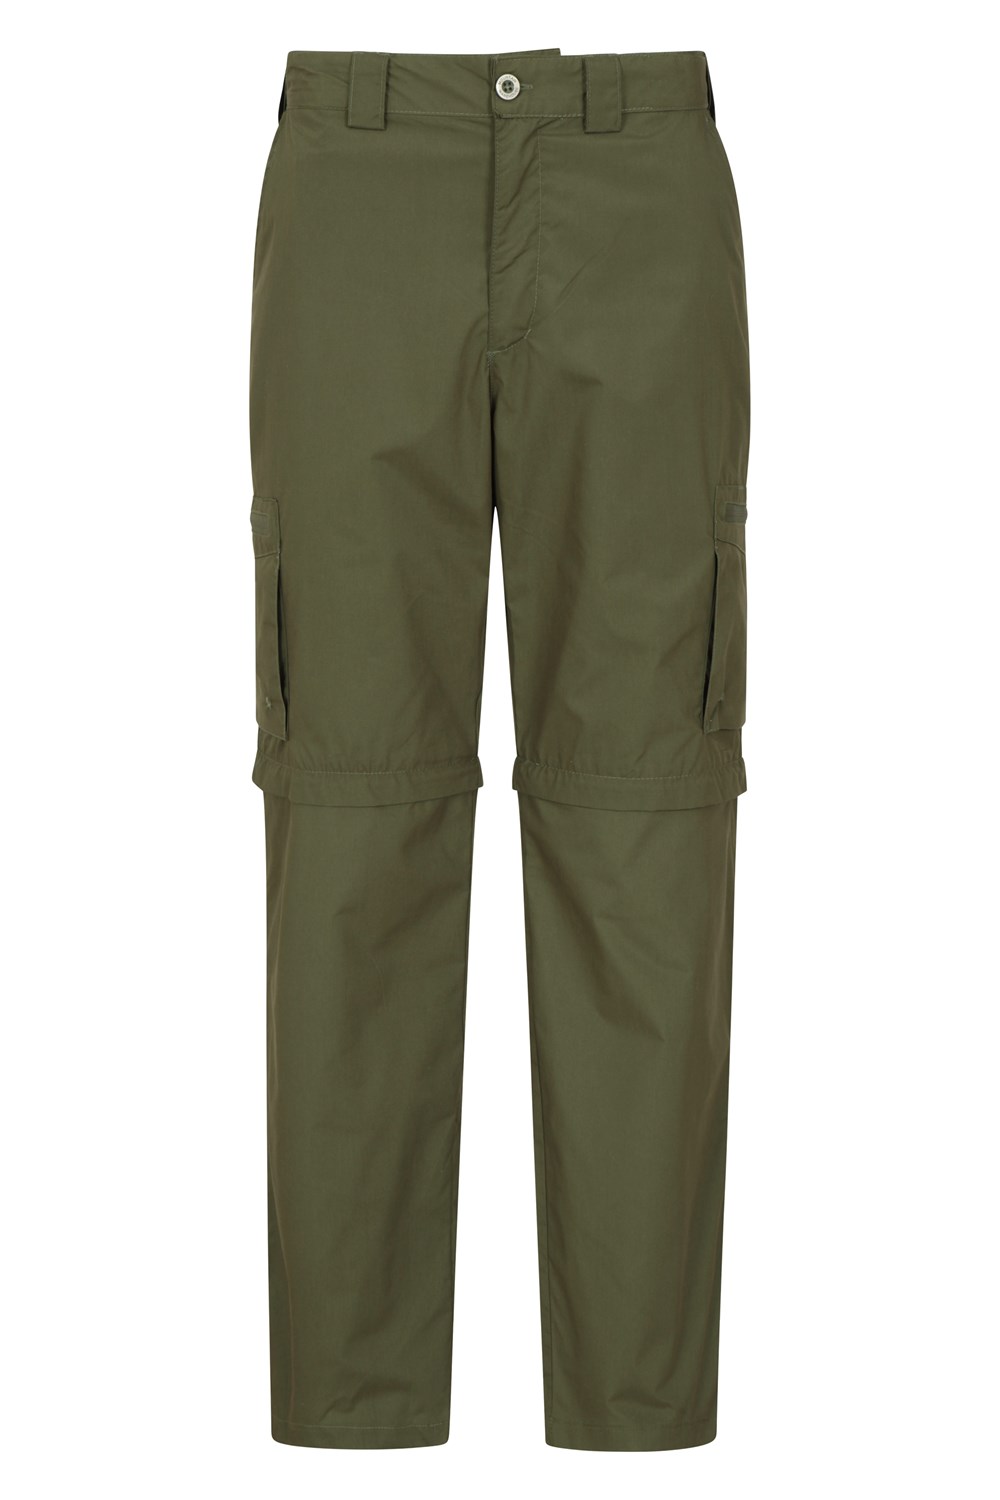 Mountain Warehouse Mens Zip Off Trek Trousers Convertible Shorts ...